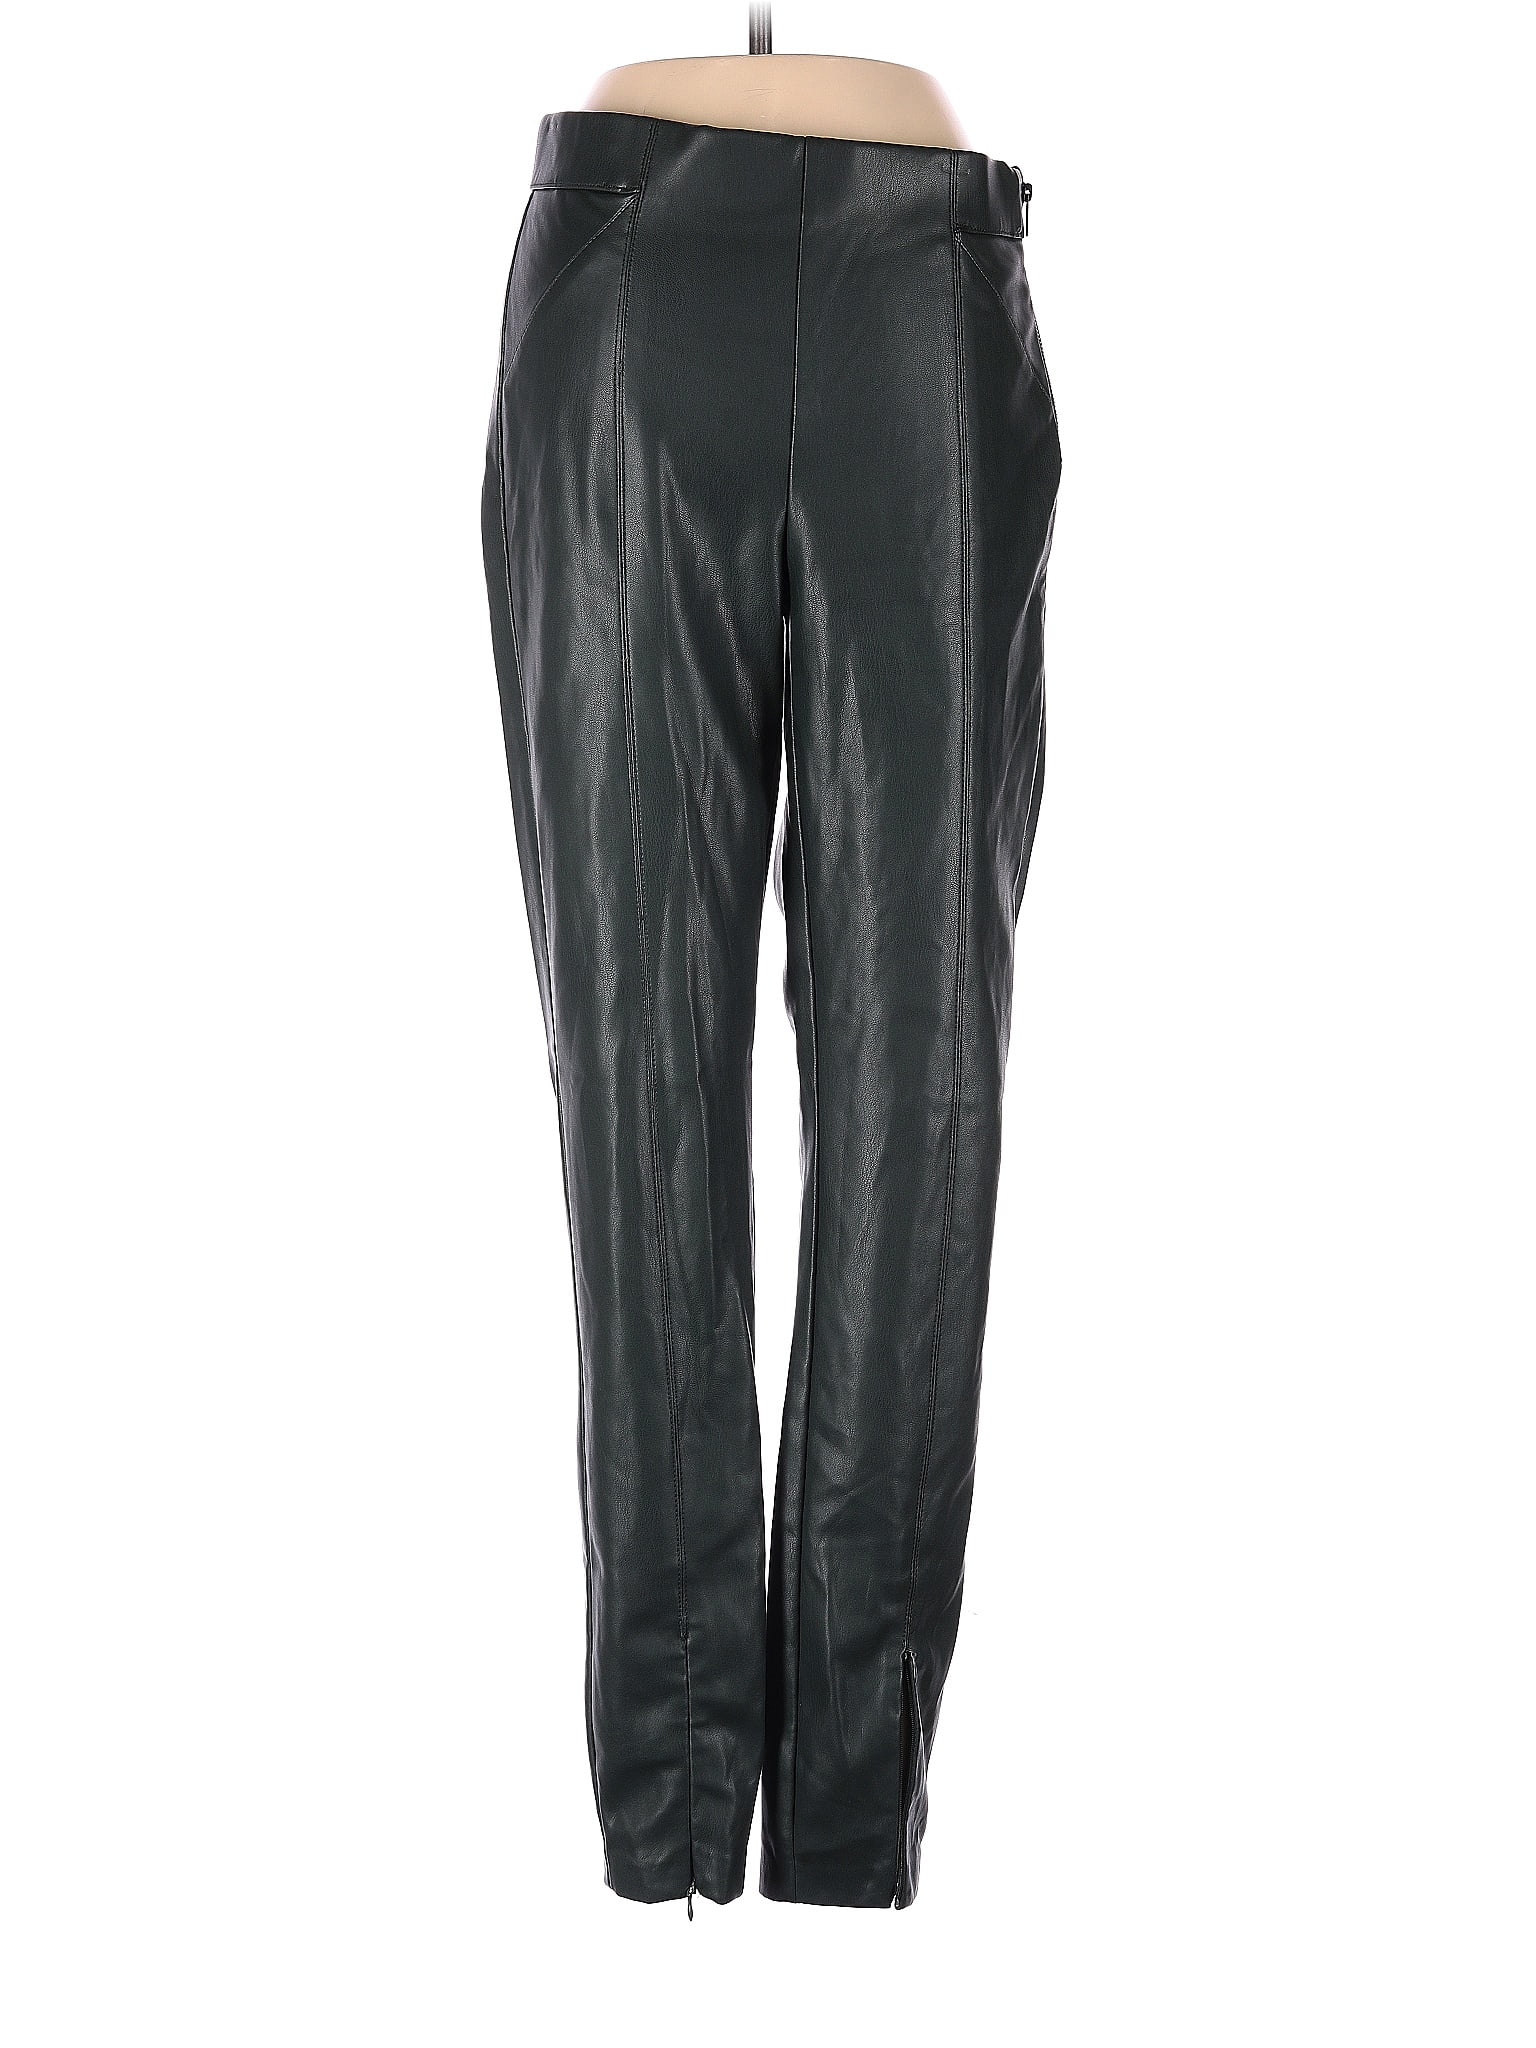 Zara 100% Polyurethane Solid Black Faux Leather Pants Size XS - 49% off